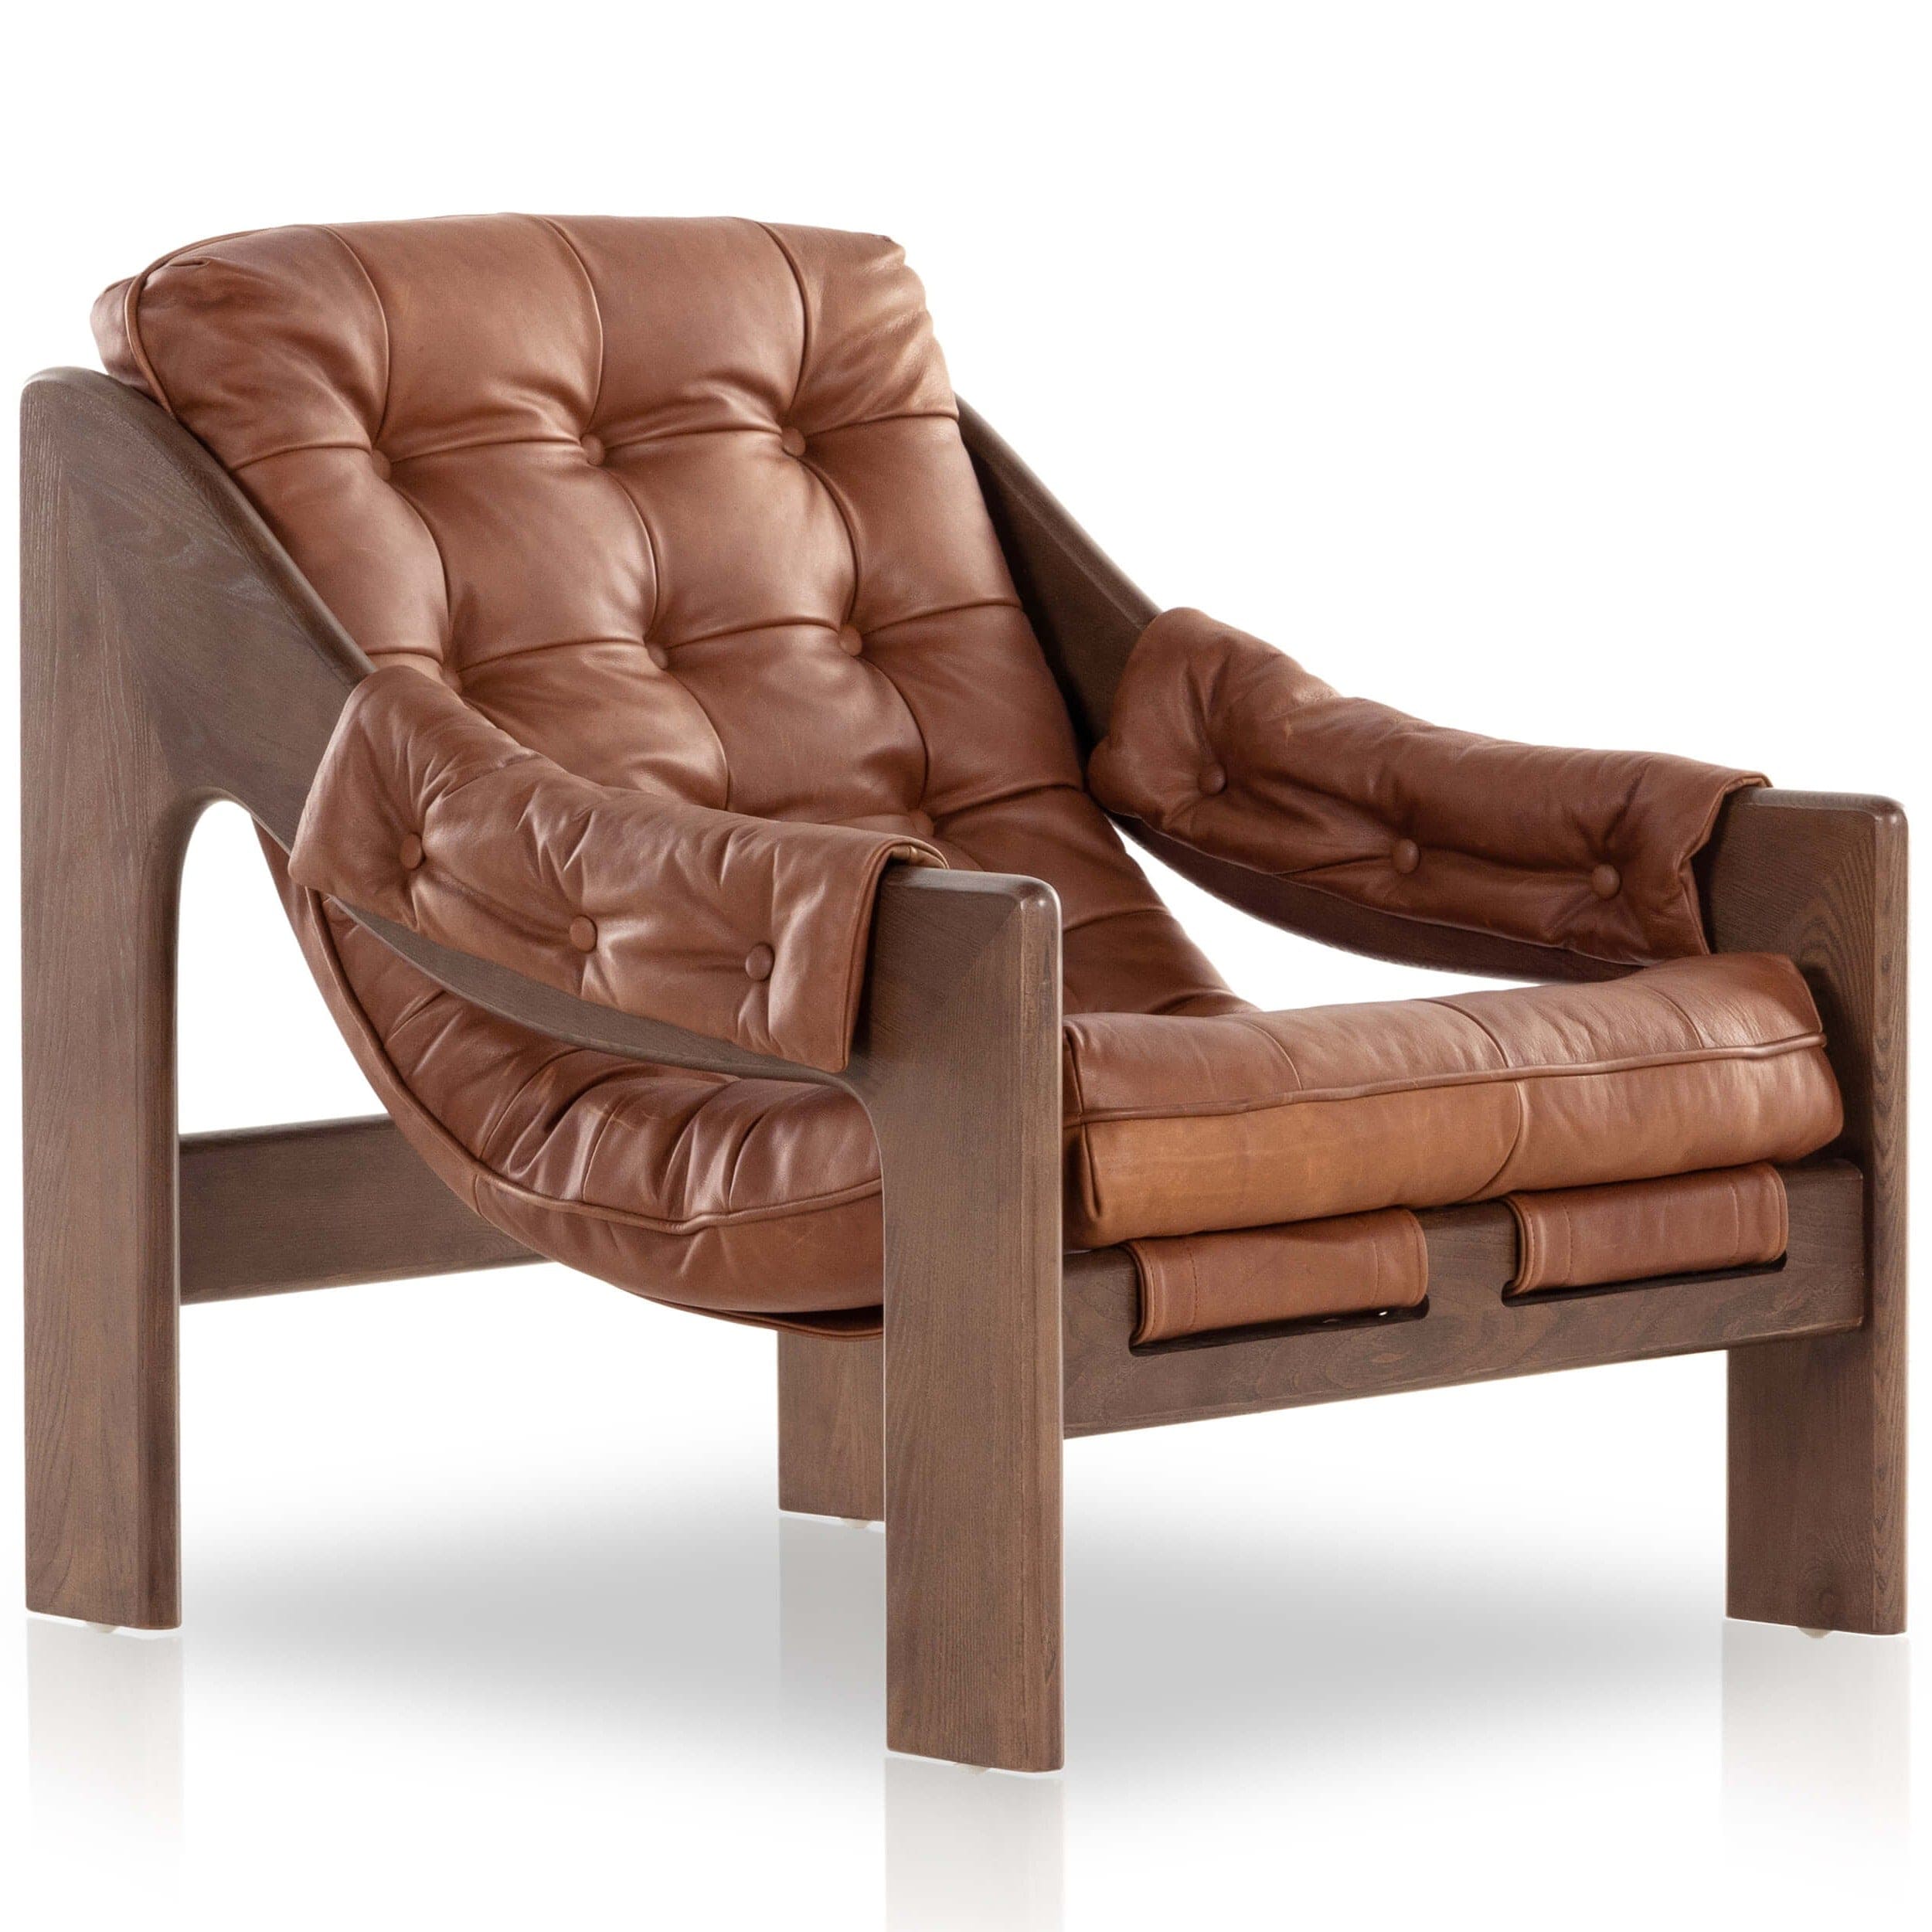 Image of Halston Leather Chair, Heirloom Sienna